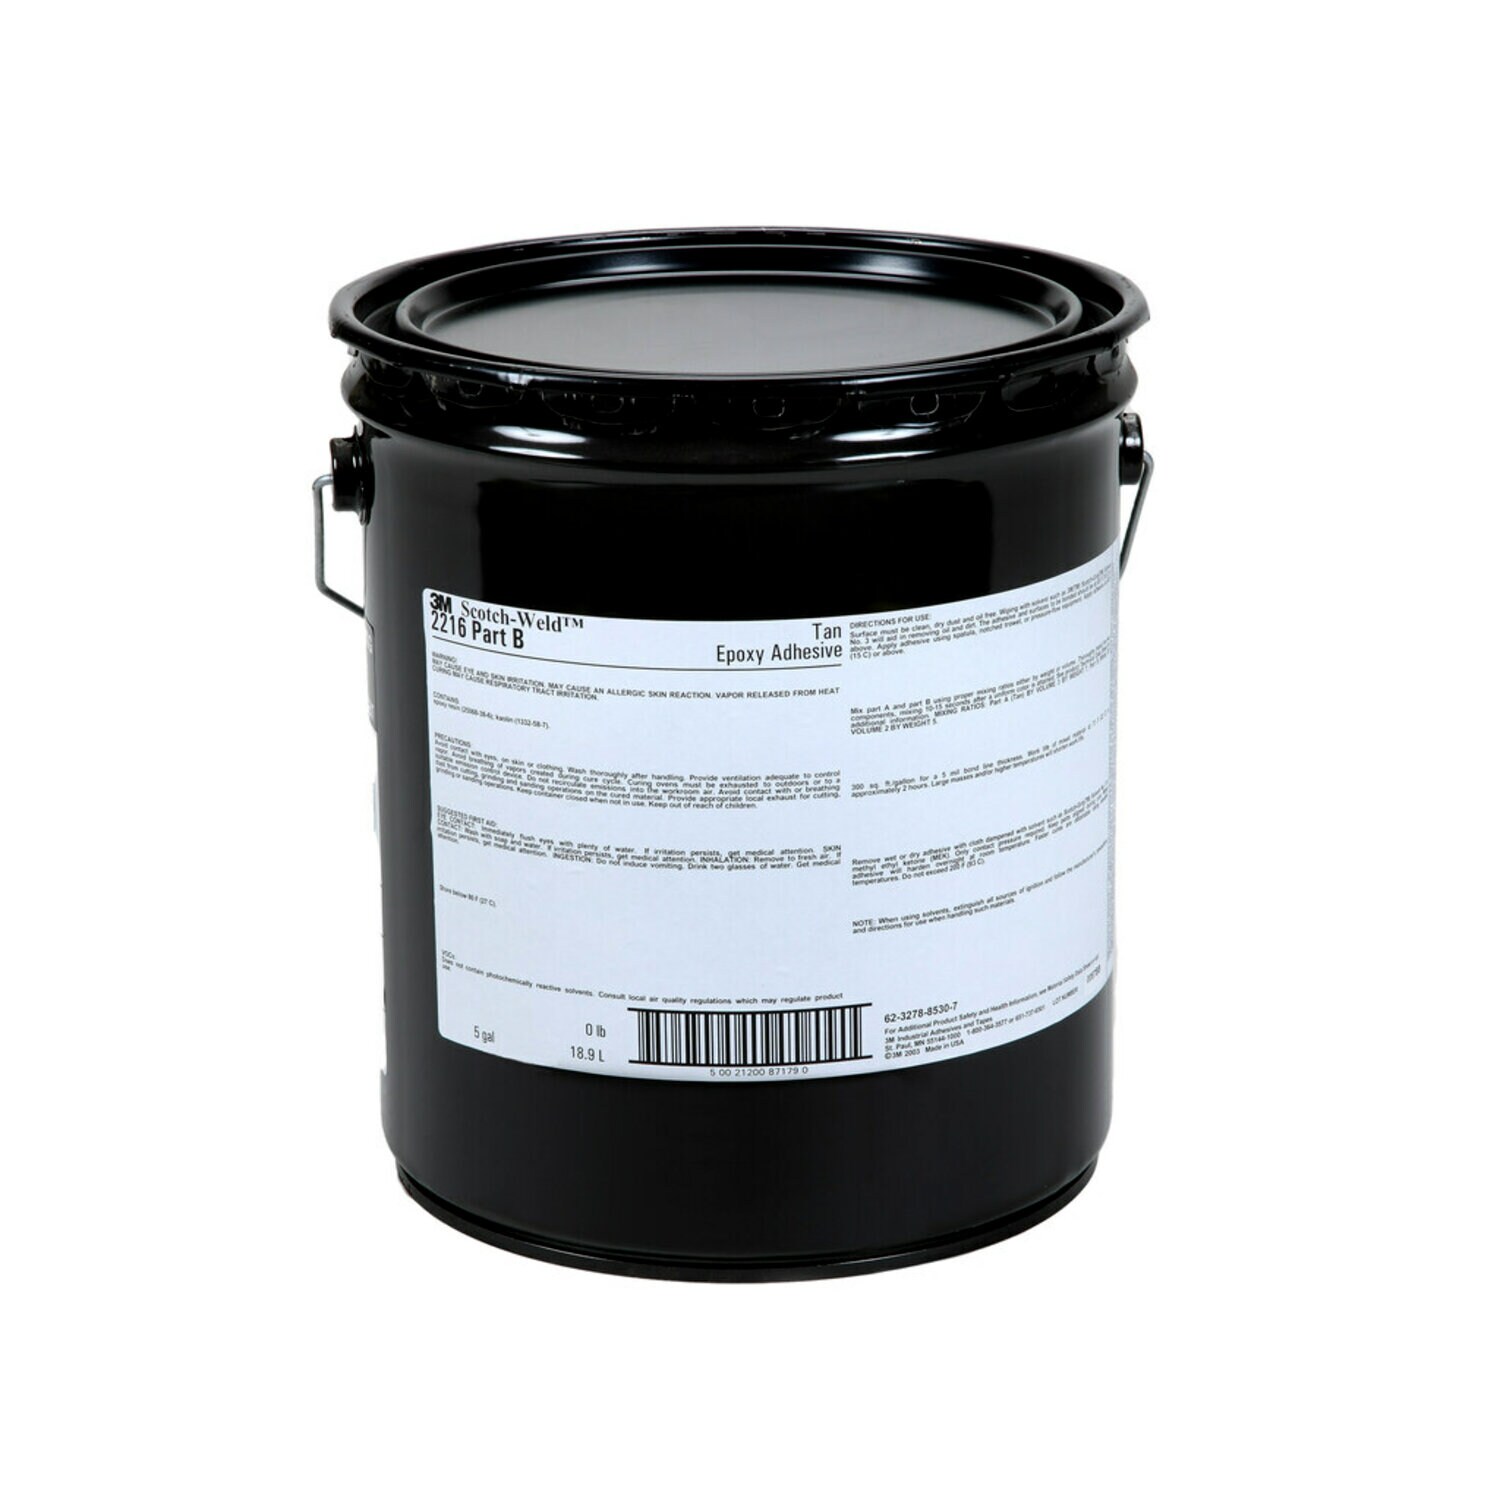 7010309882 - 3M Scotch-Weld Epoxy Adhesive 2216NS, Tan, Part B, 5 Gallon (Pail),
Drum